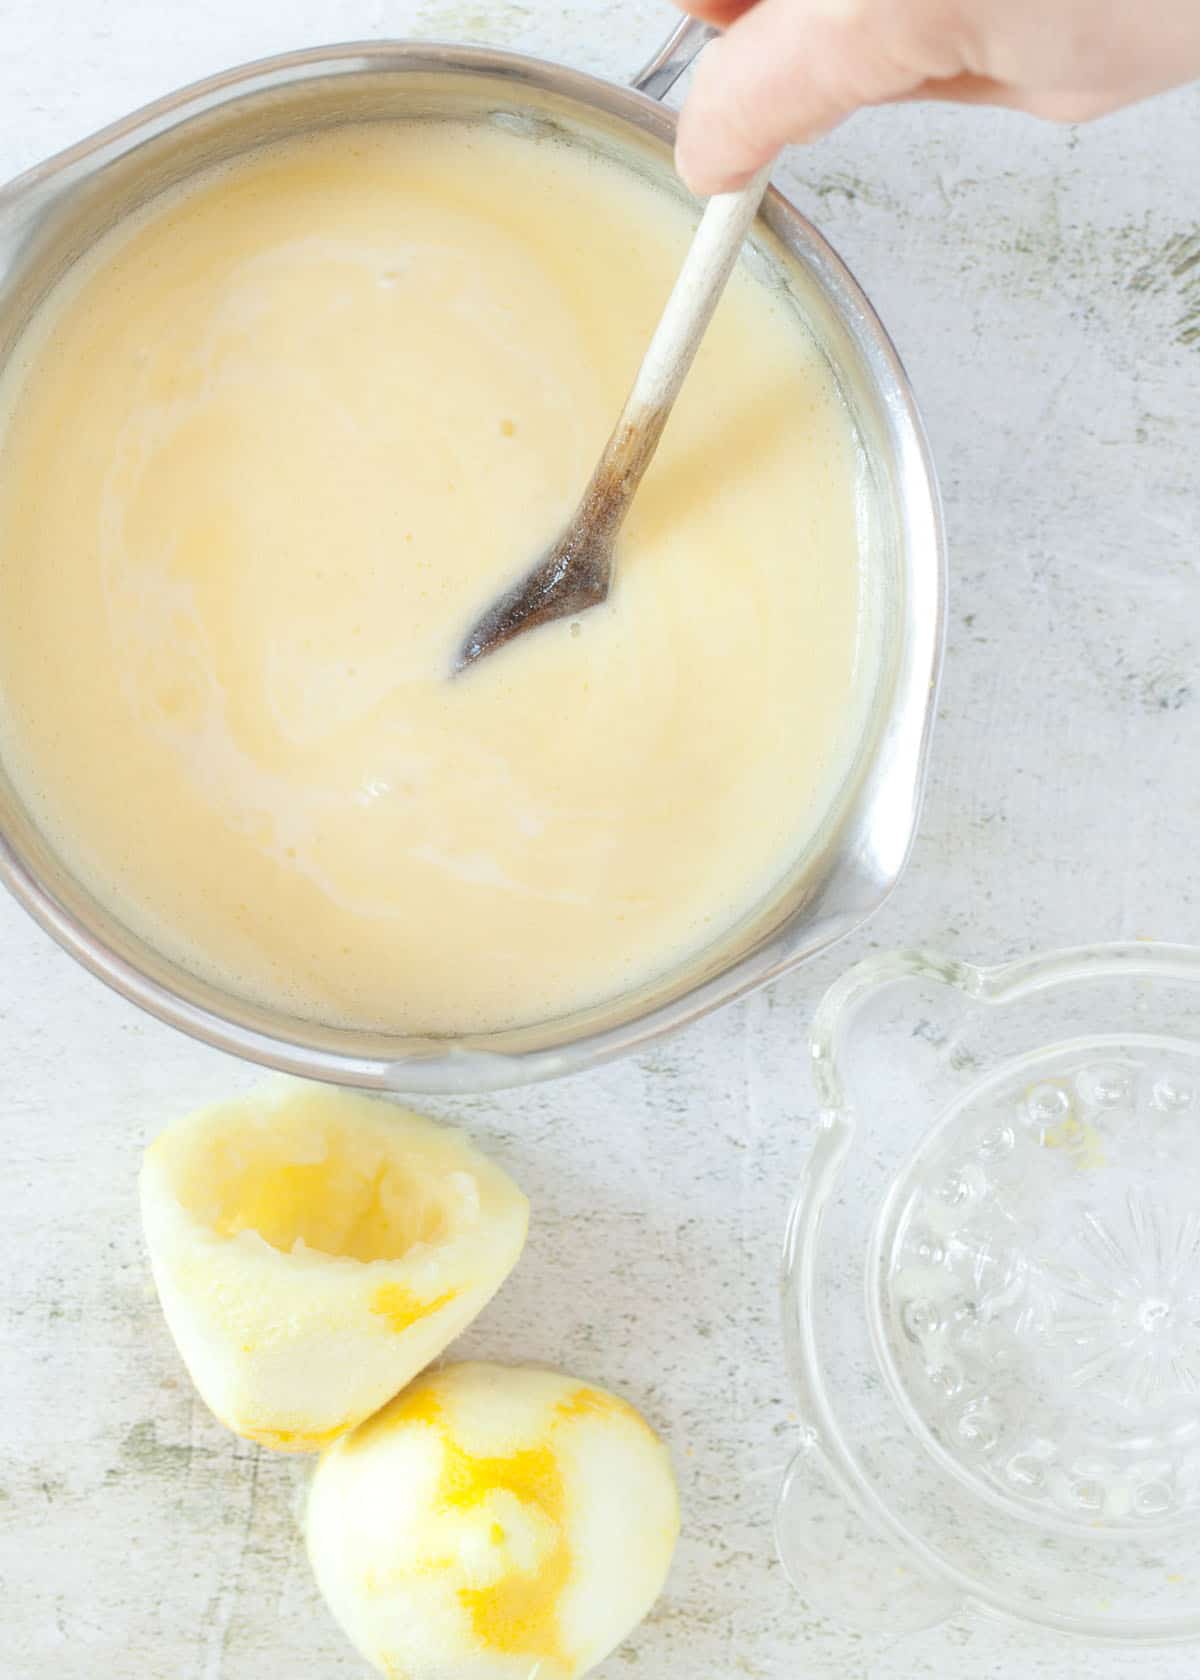 Process shot - stirring lemon juice into cream